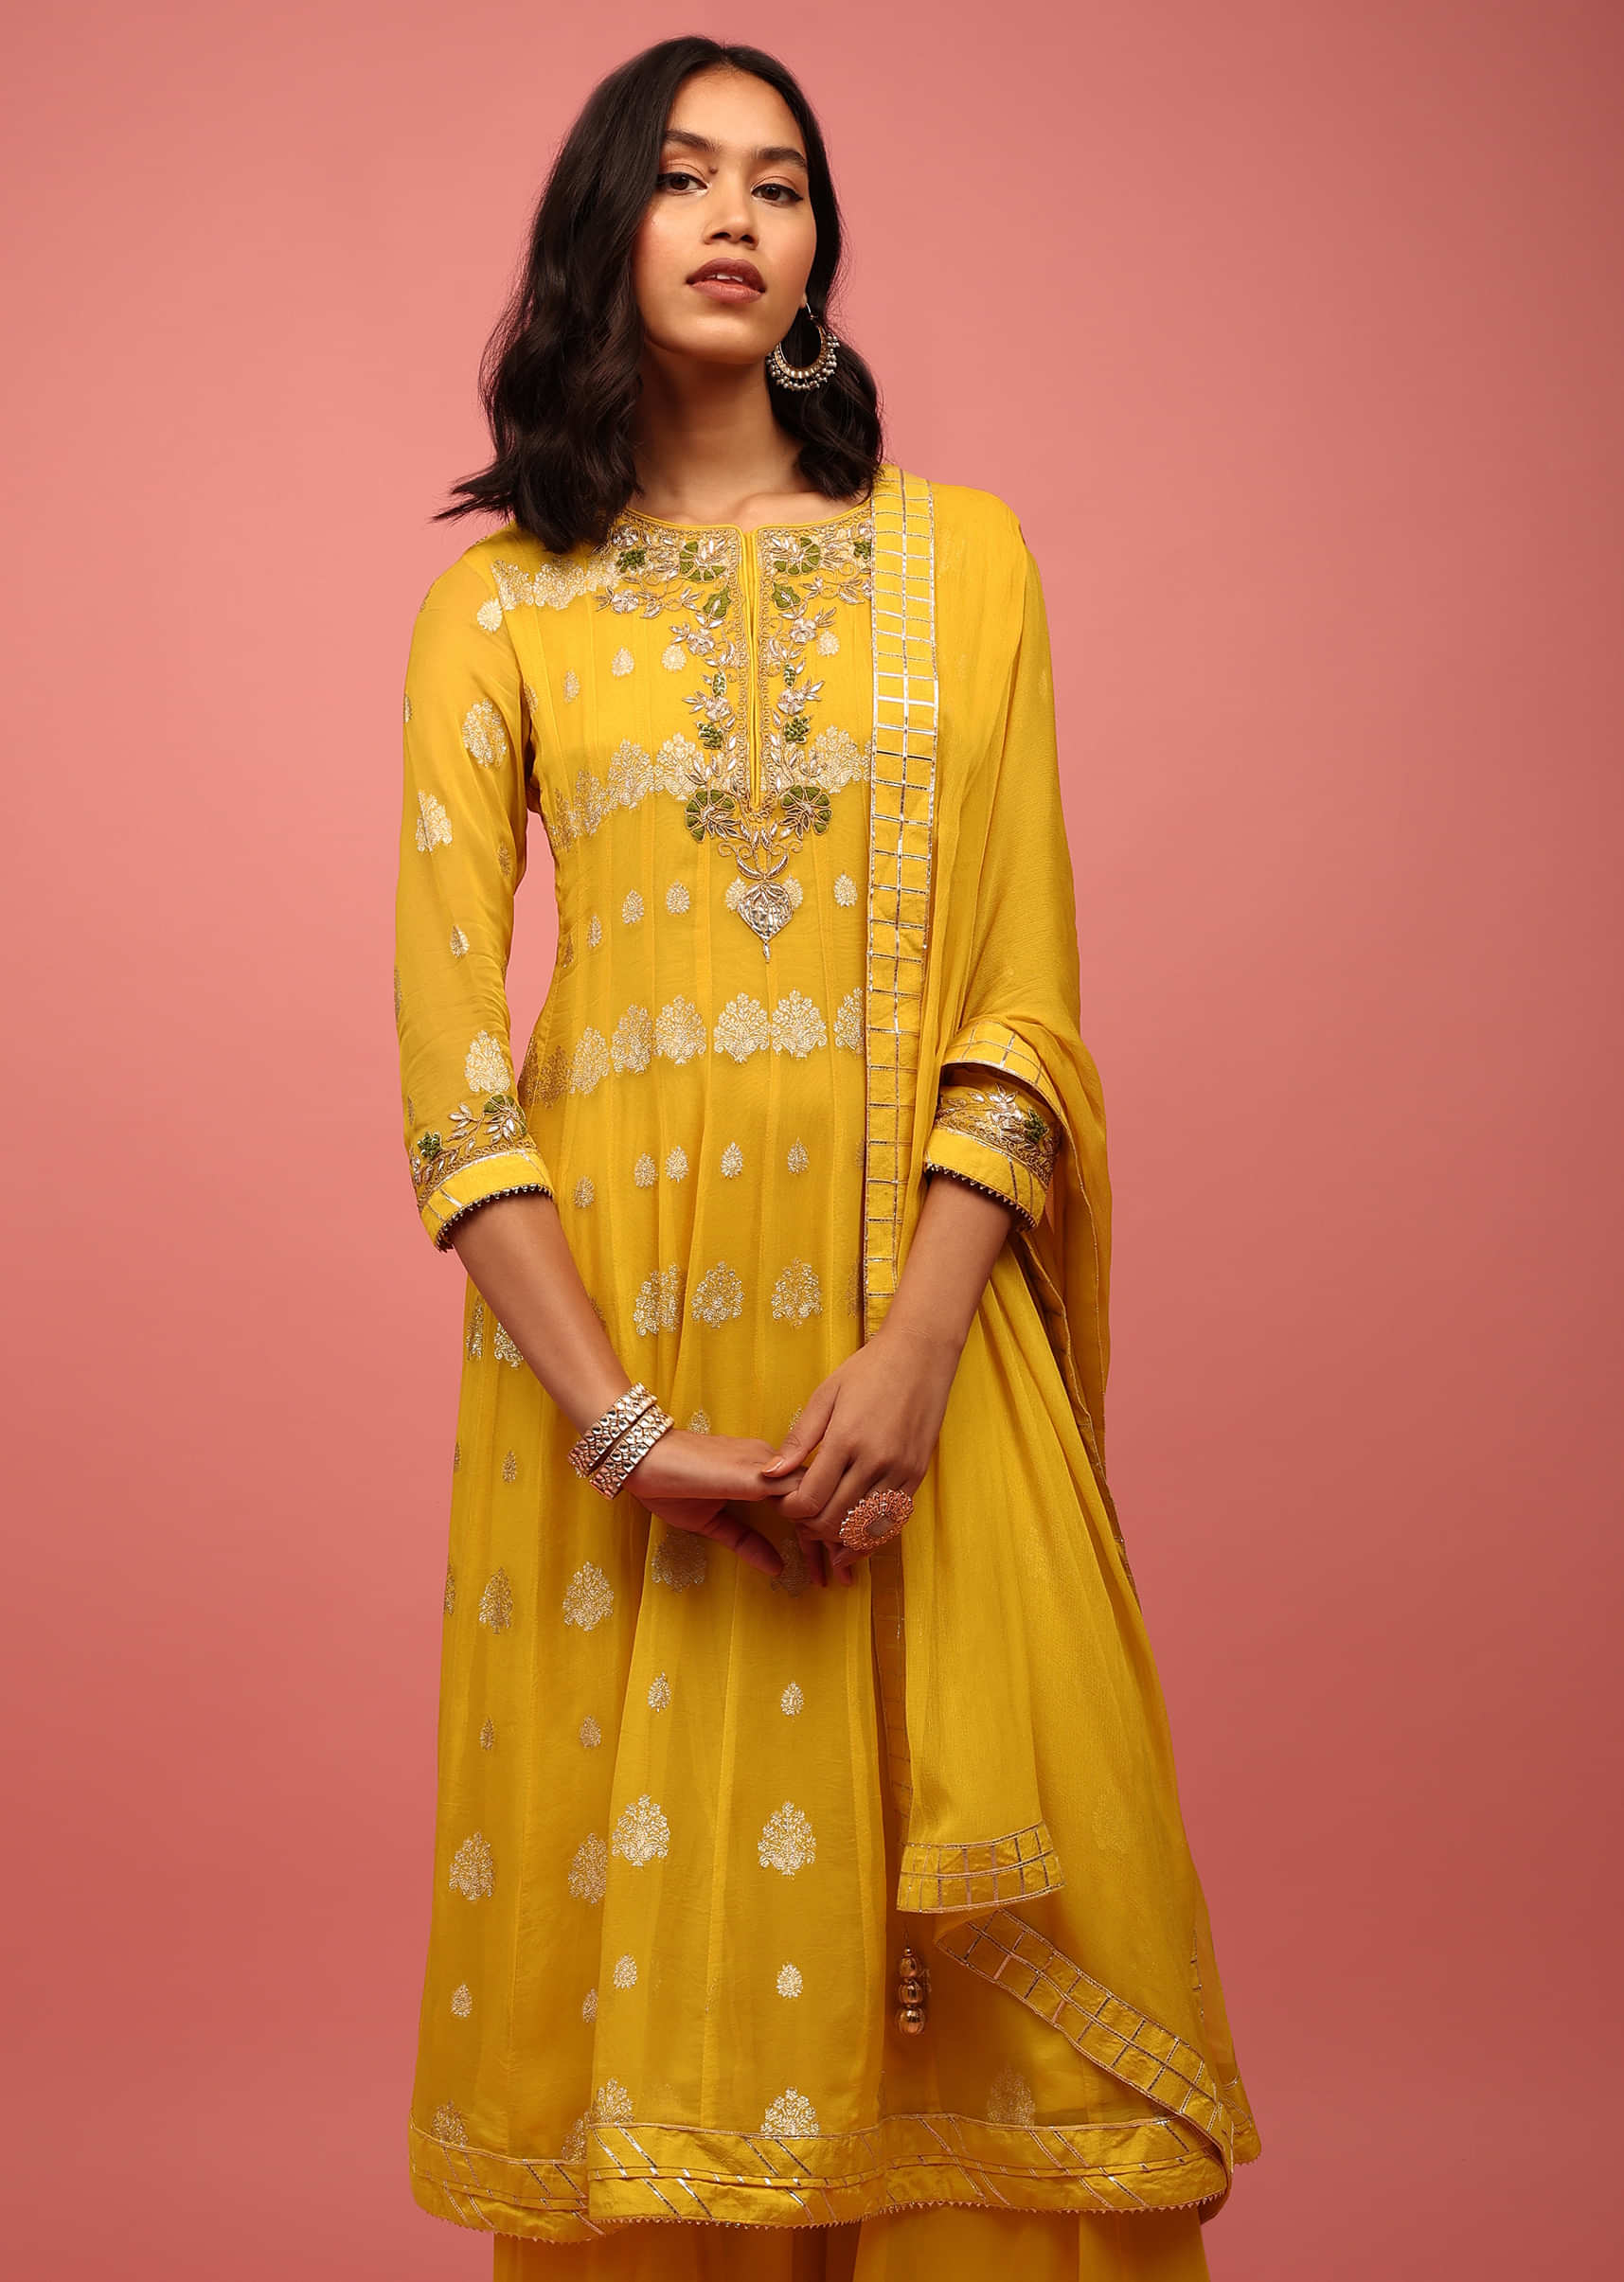 Chrome Yellow Anarkali Suit Set In Banarasi Georgette, Embellished With Brocade And Zardosi Work